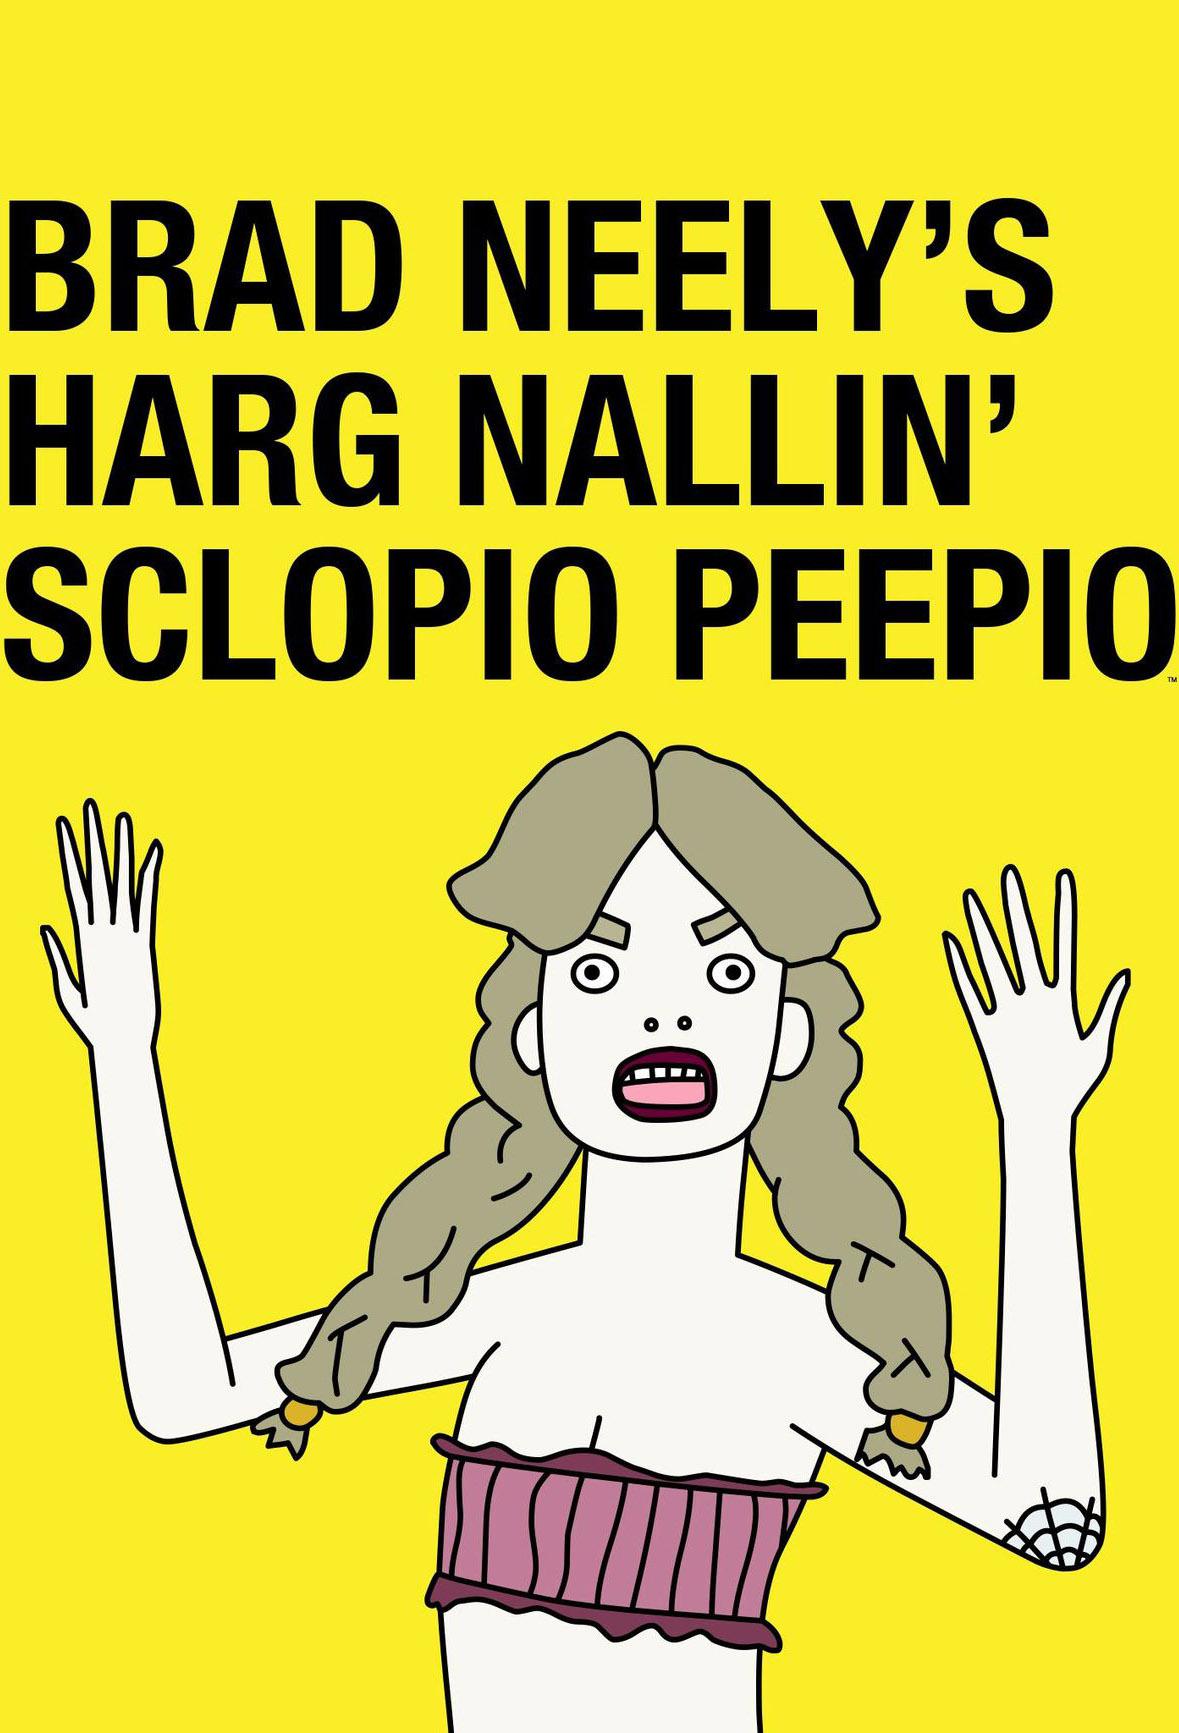 TV ratings for Brad Neely's Harg Nallin' Sclopio Peepio in Brazil. Adult Swim TV series